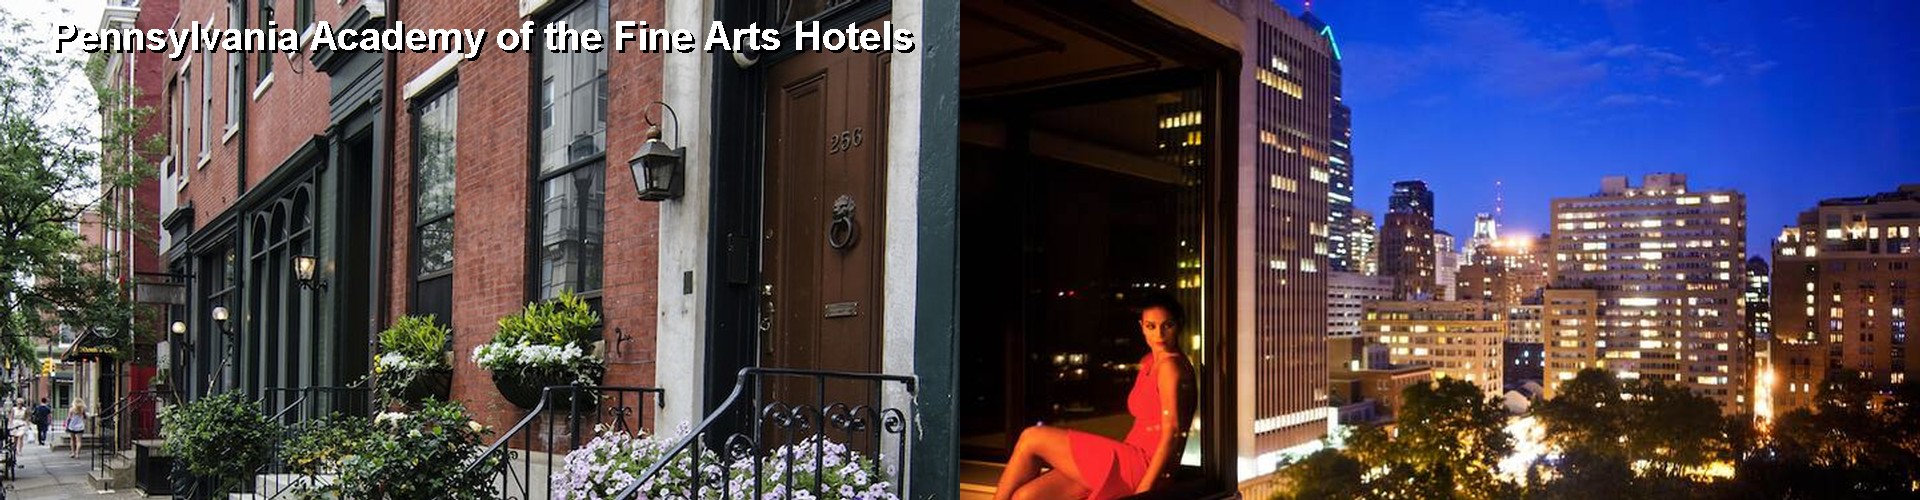 5 Best Hotels near Pennsylvania Academy of the Fine Arts